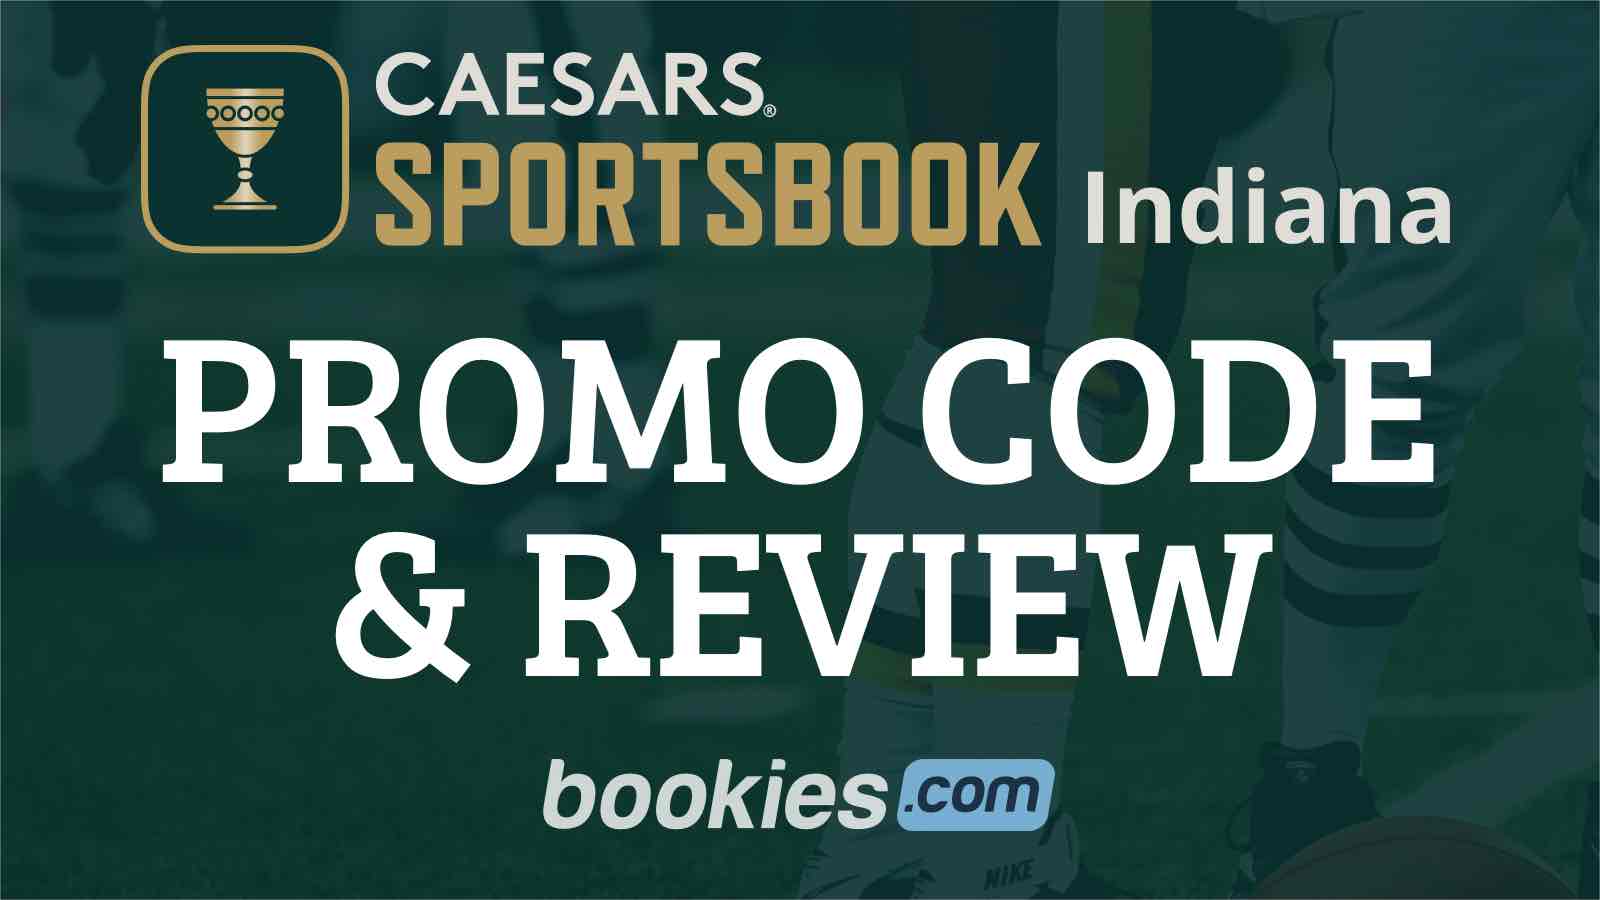 Caesars sportsbook promo code indiana stellar cryptocurrency mining